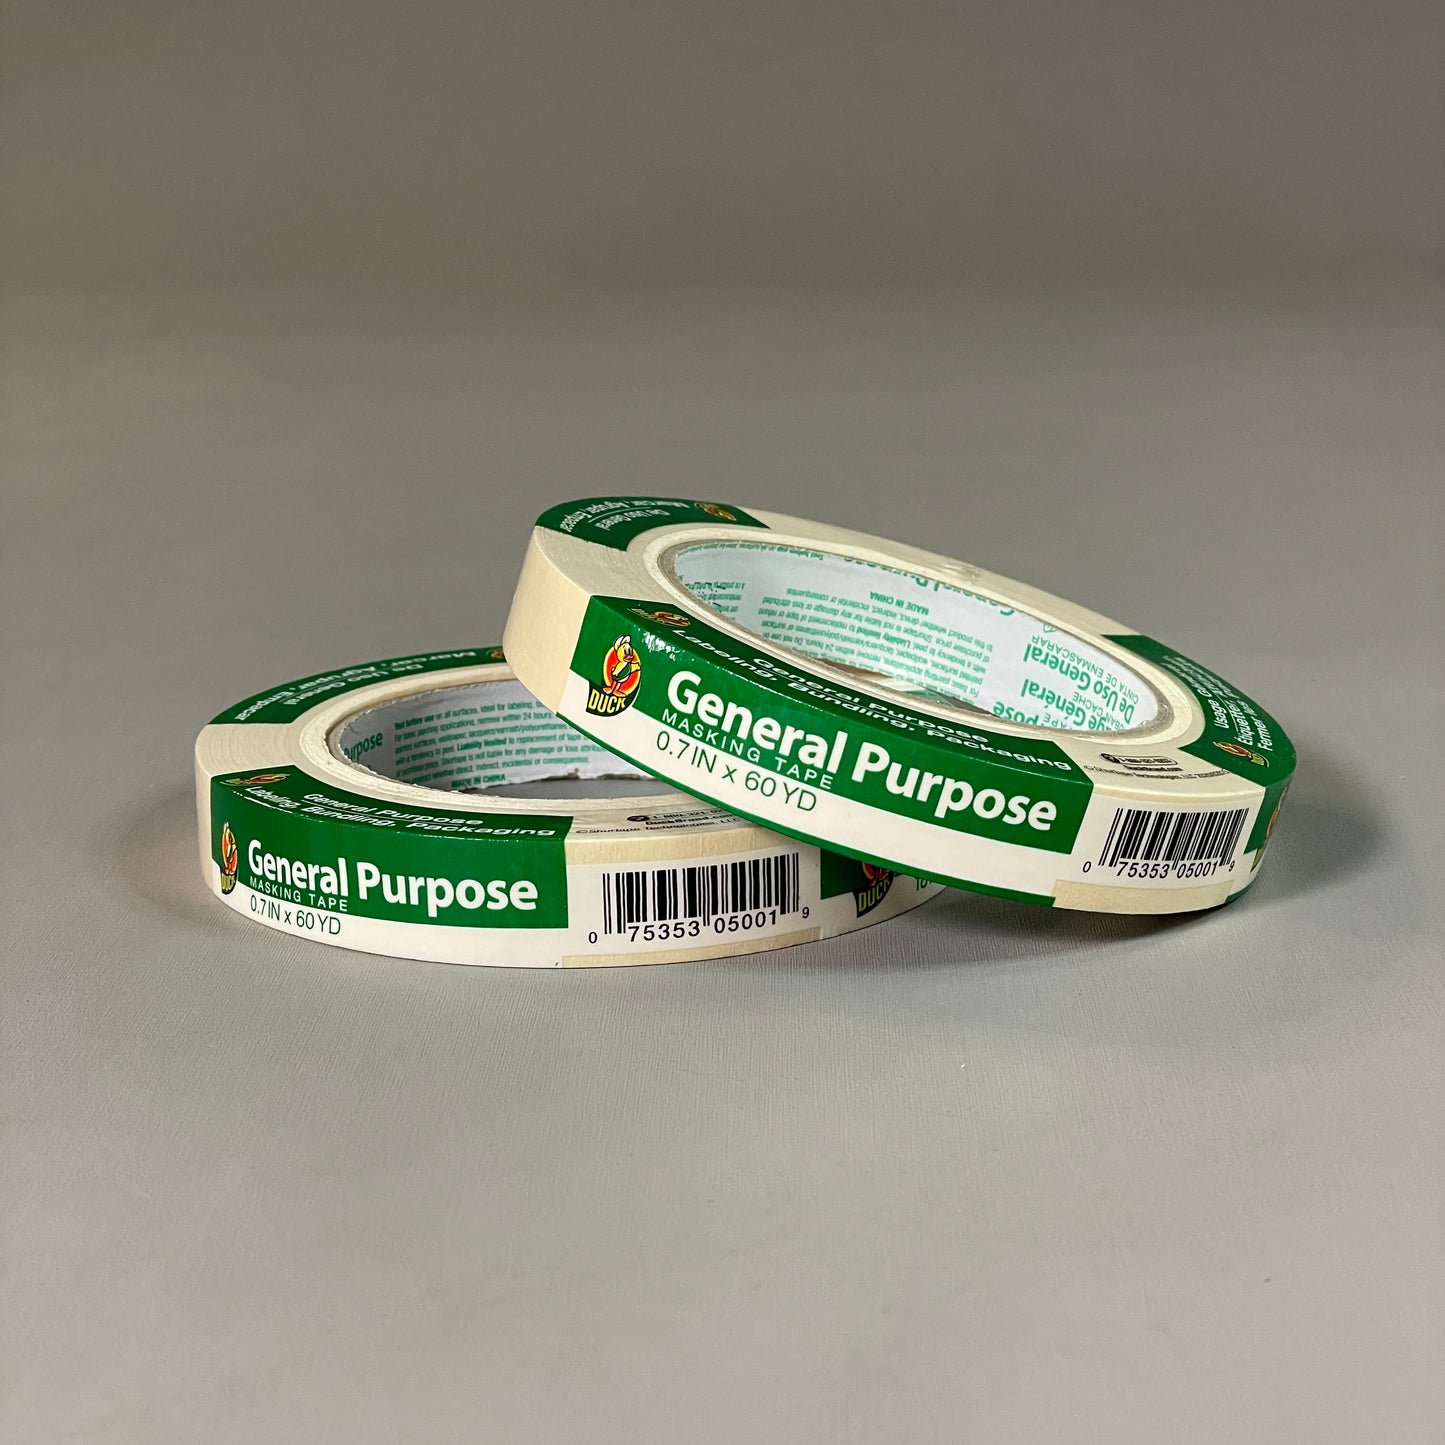 SHURTAPE DUCK General Purpose Masking Tape 2-PACK 286500(New)